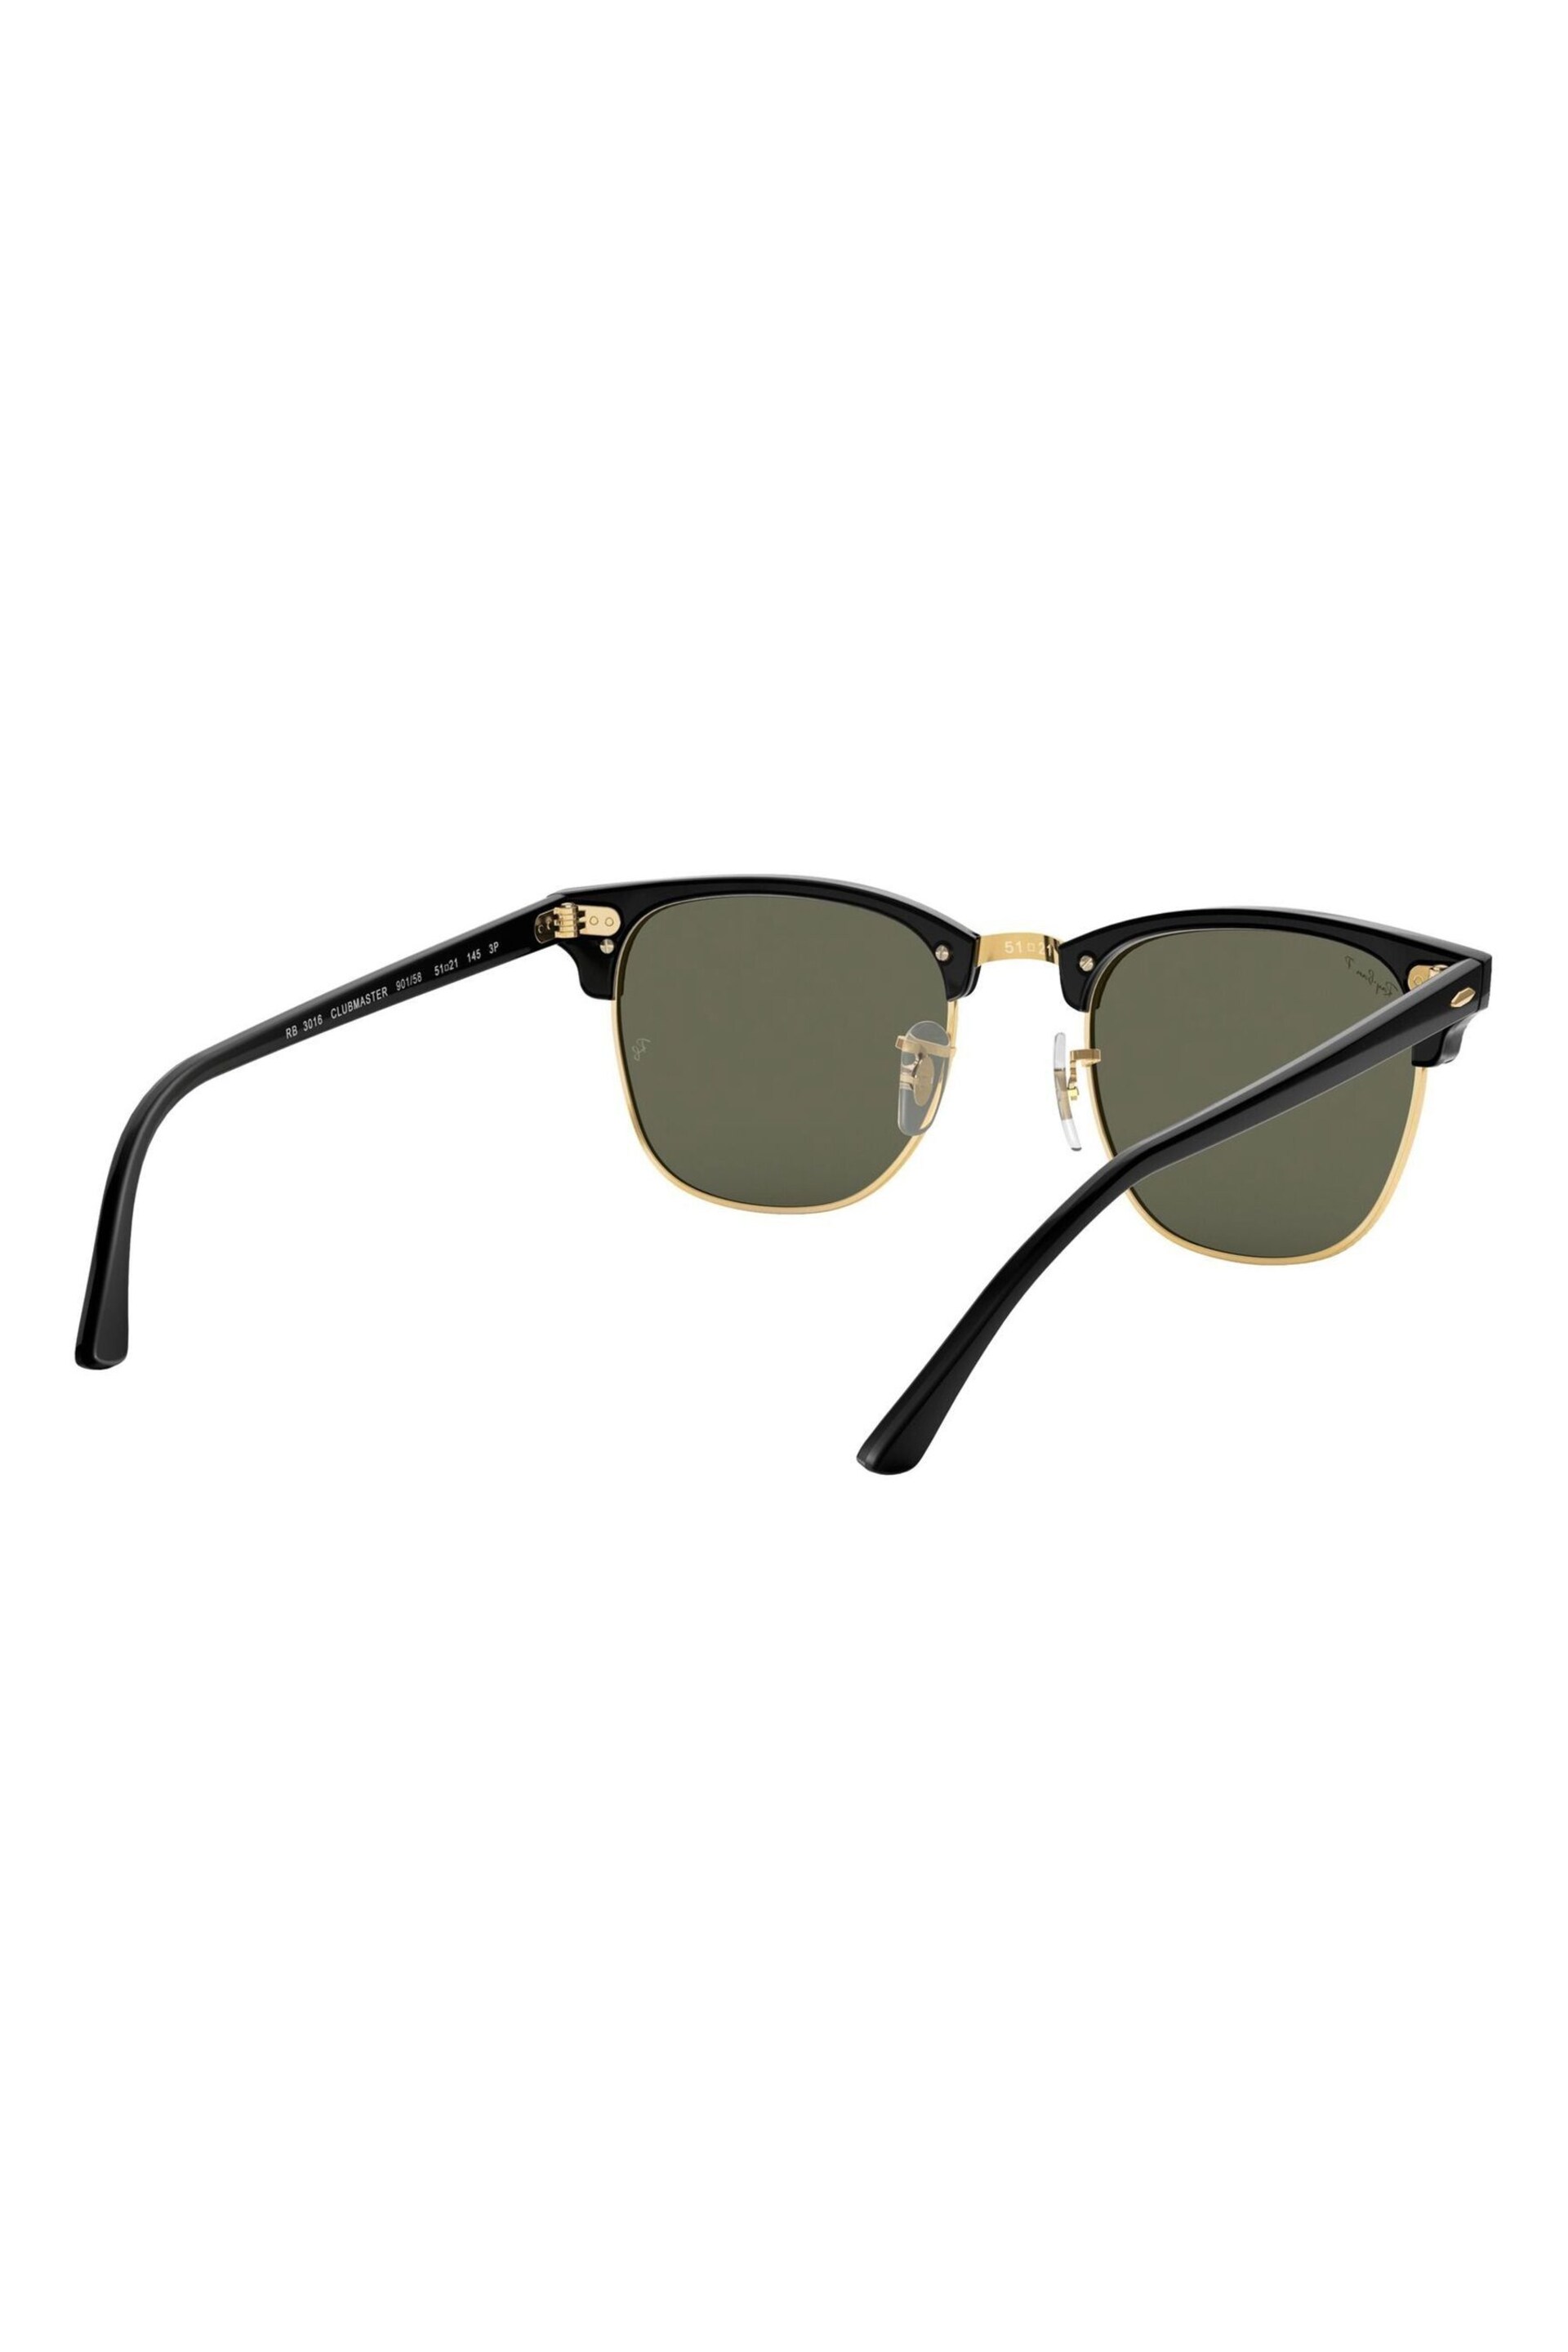 Ray-Ban Polarised Clubmaster Sunglasses - Image 7 of 12